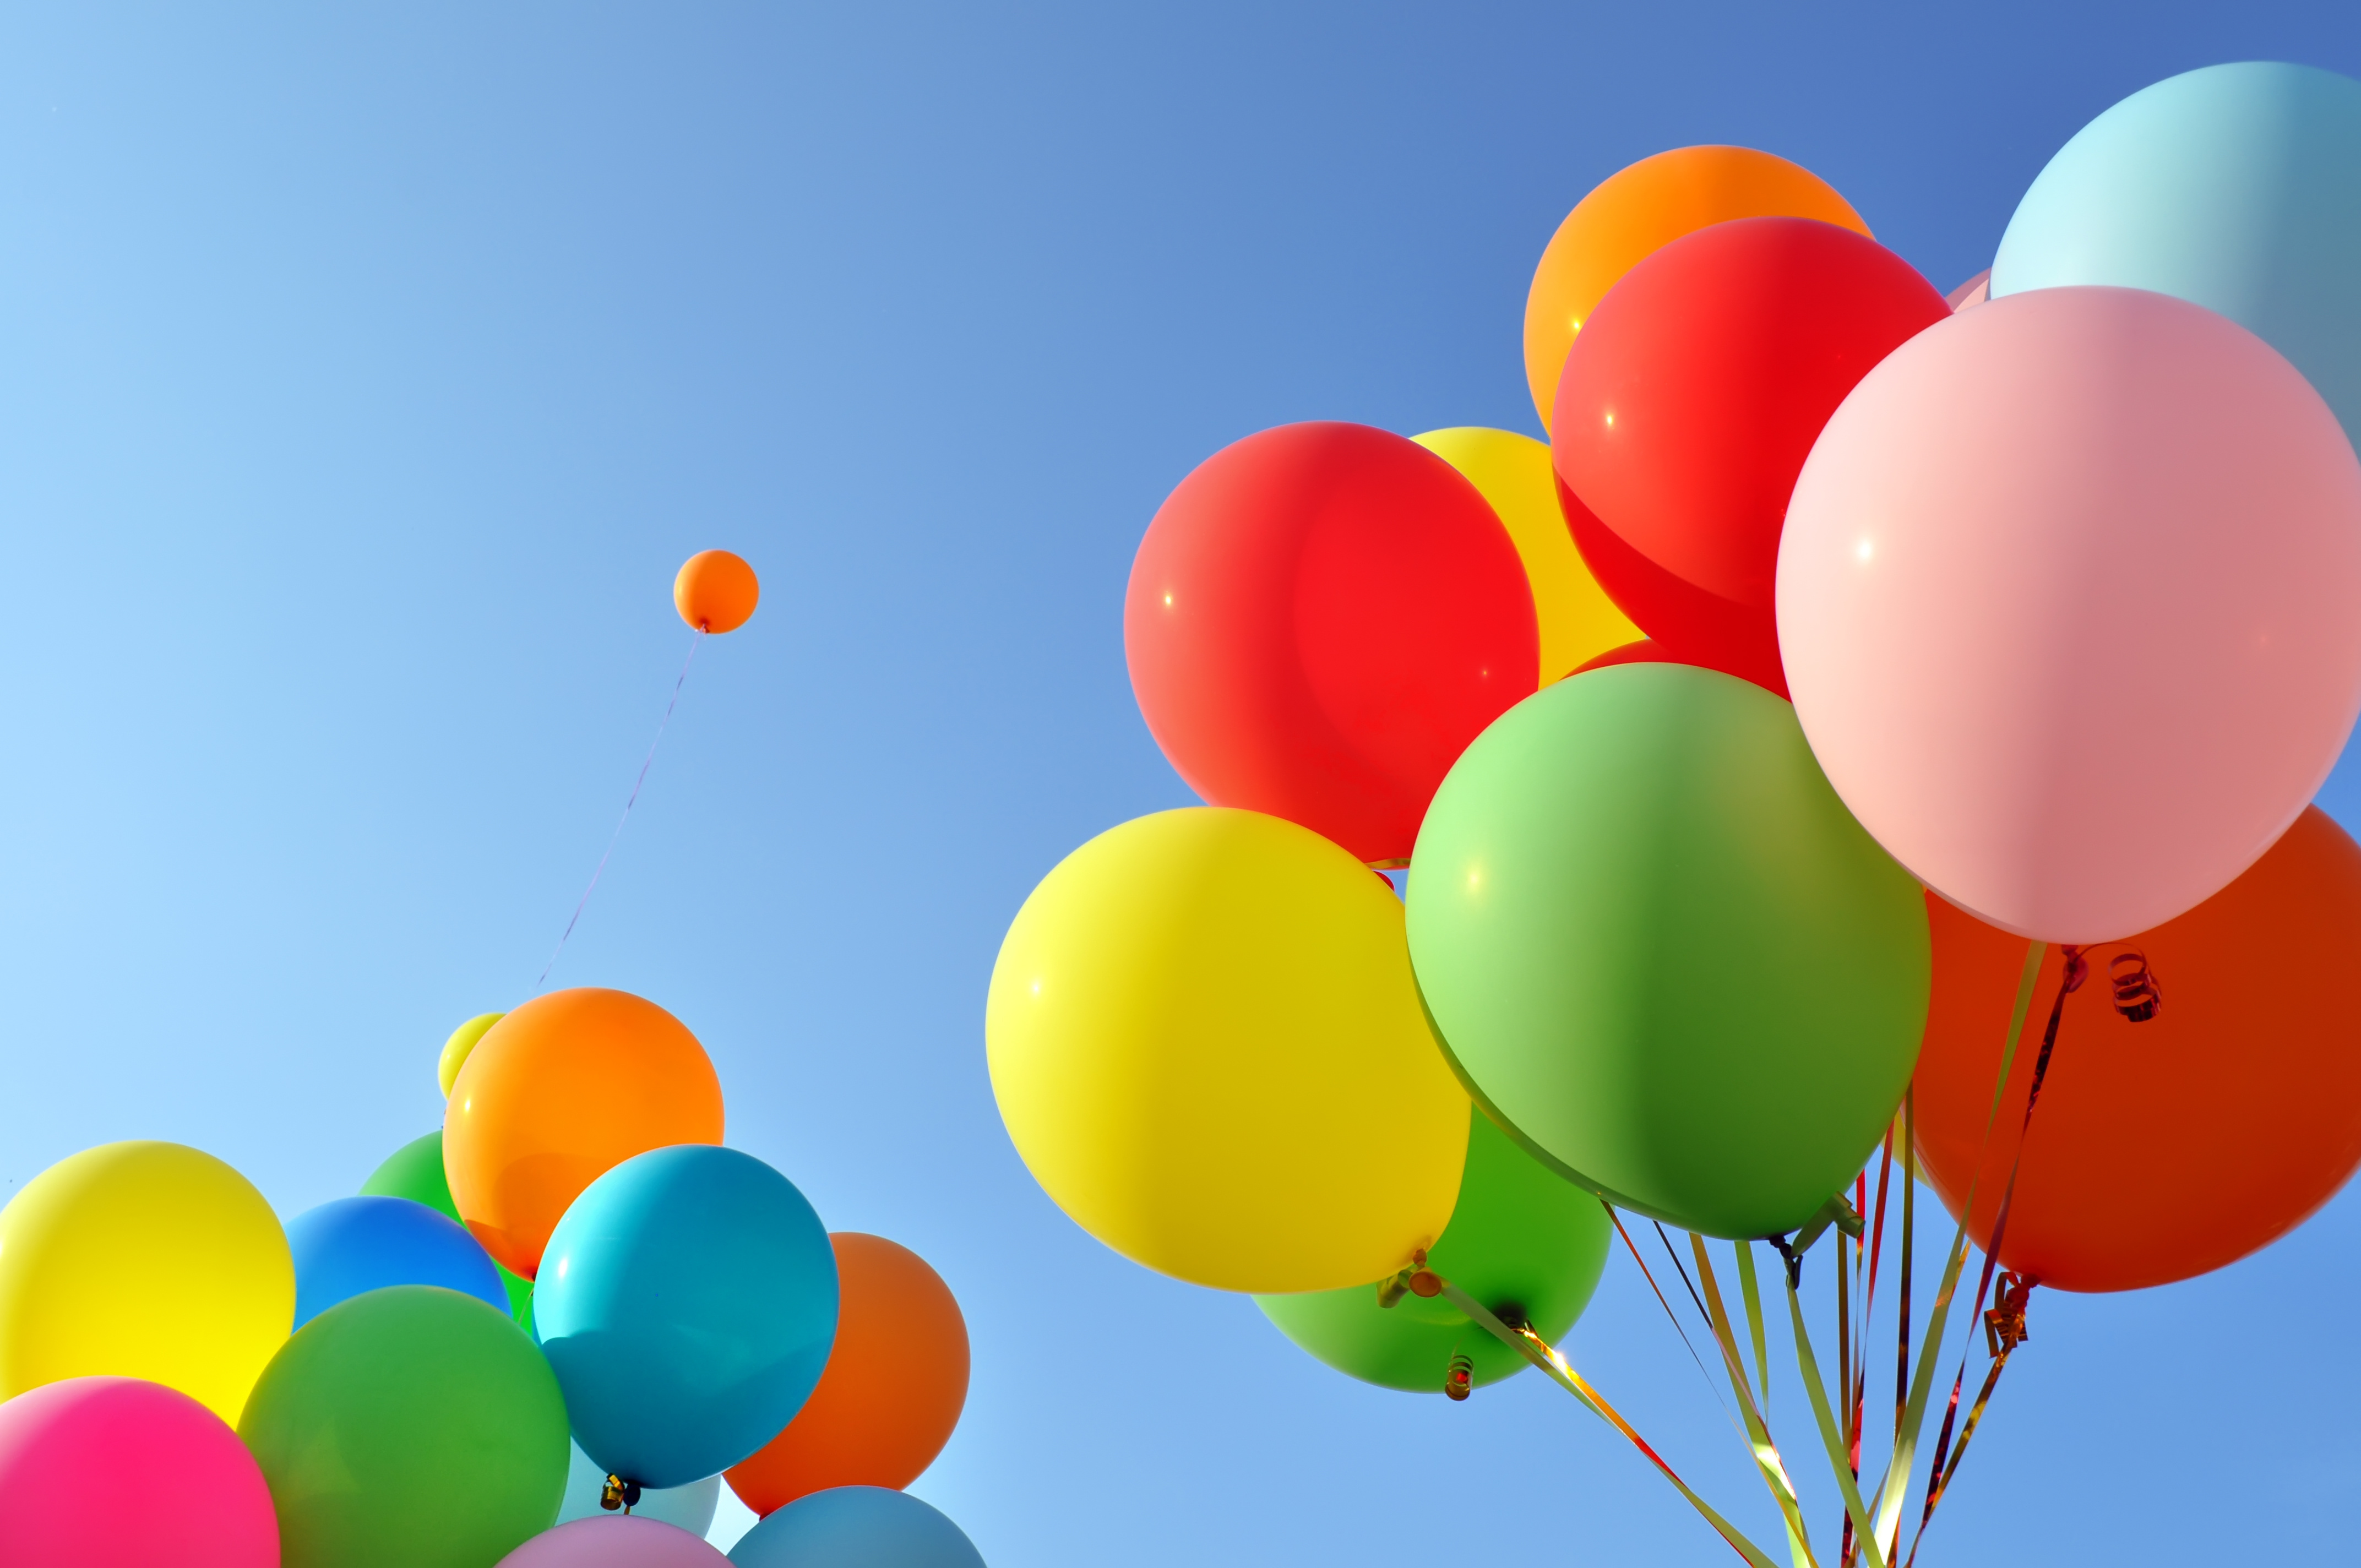 tapete balon,ballon,tagsüber,heißluftballon fahren,himmel,partyversorgung